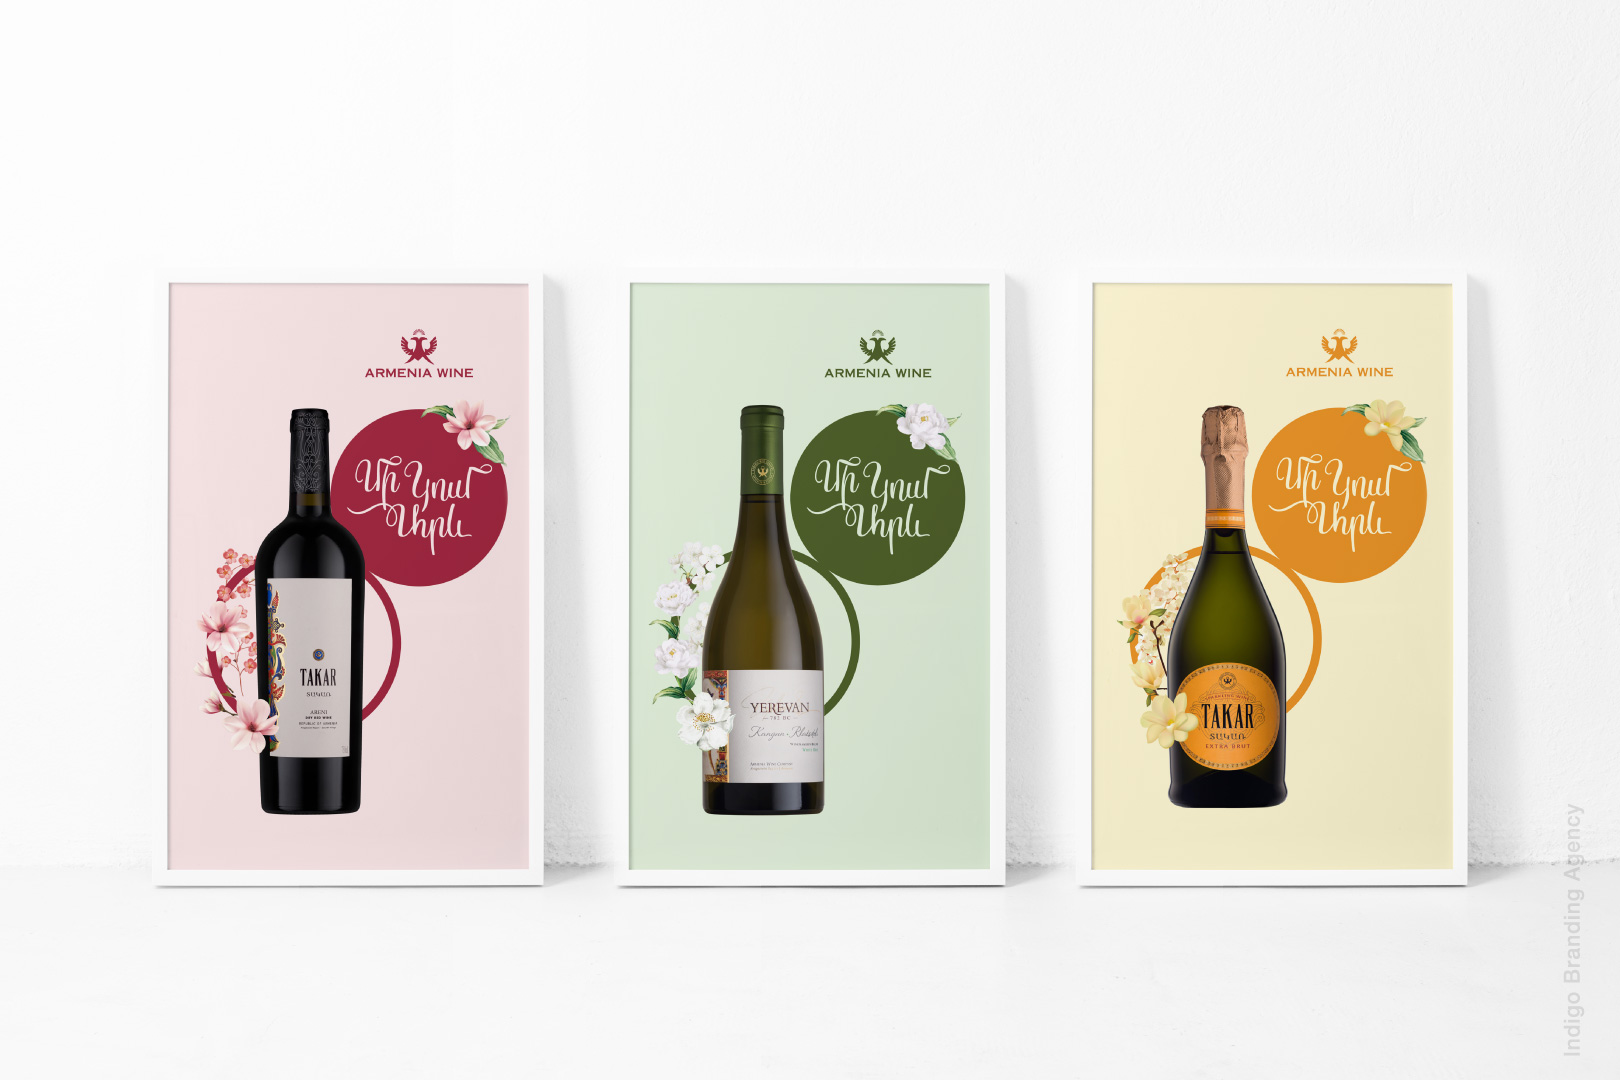 Armenia Wine outdoor advertising branding and visual Identity by Indigo branding